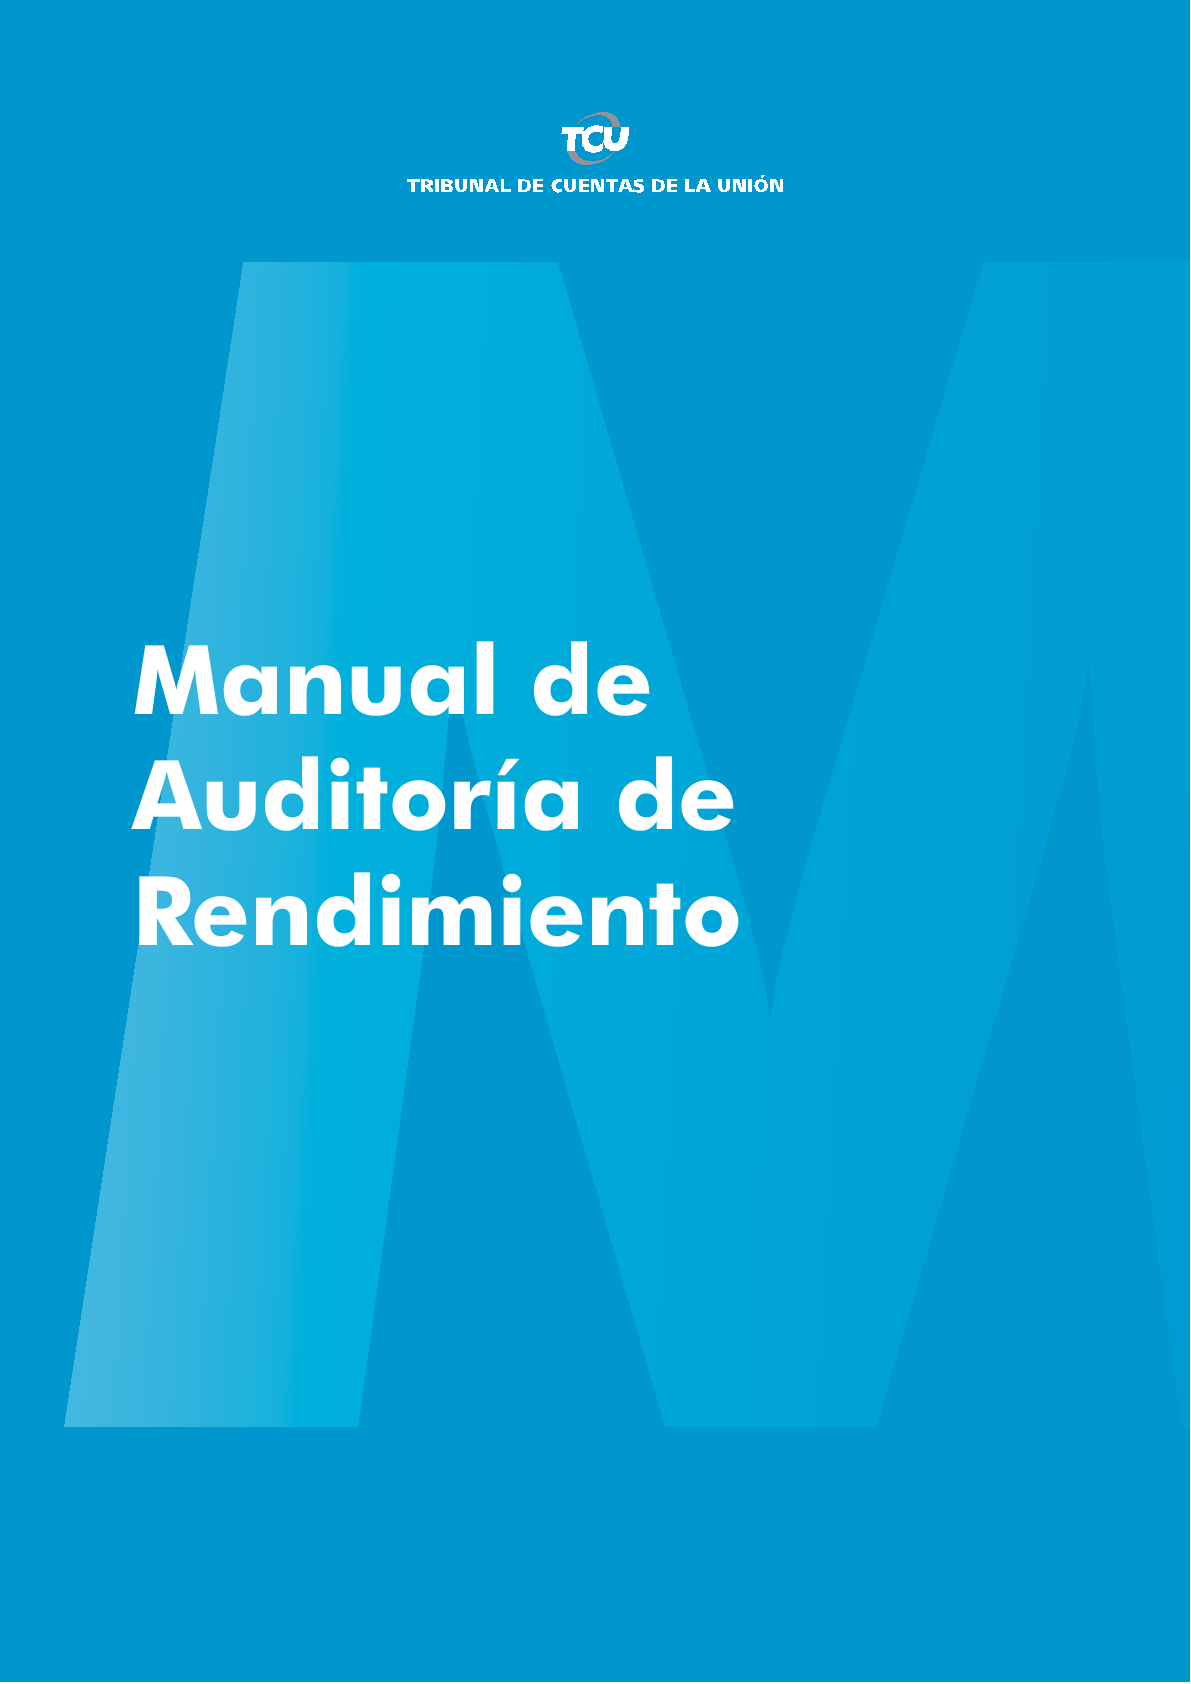 manual de auditoria de rendimiento - anop.png